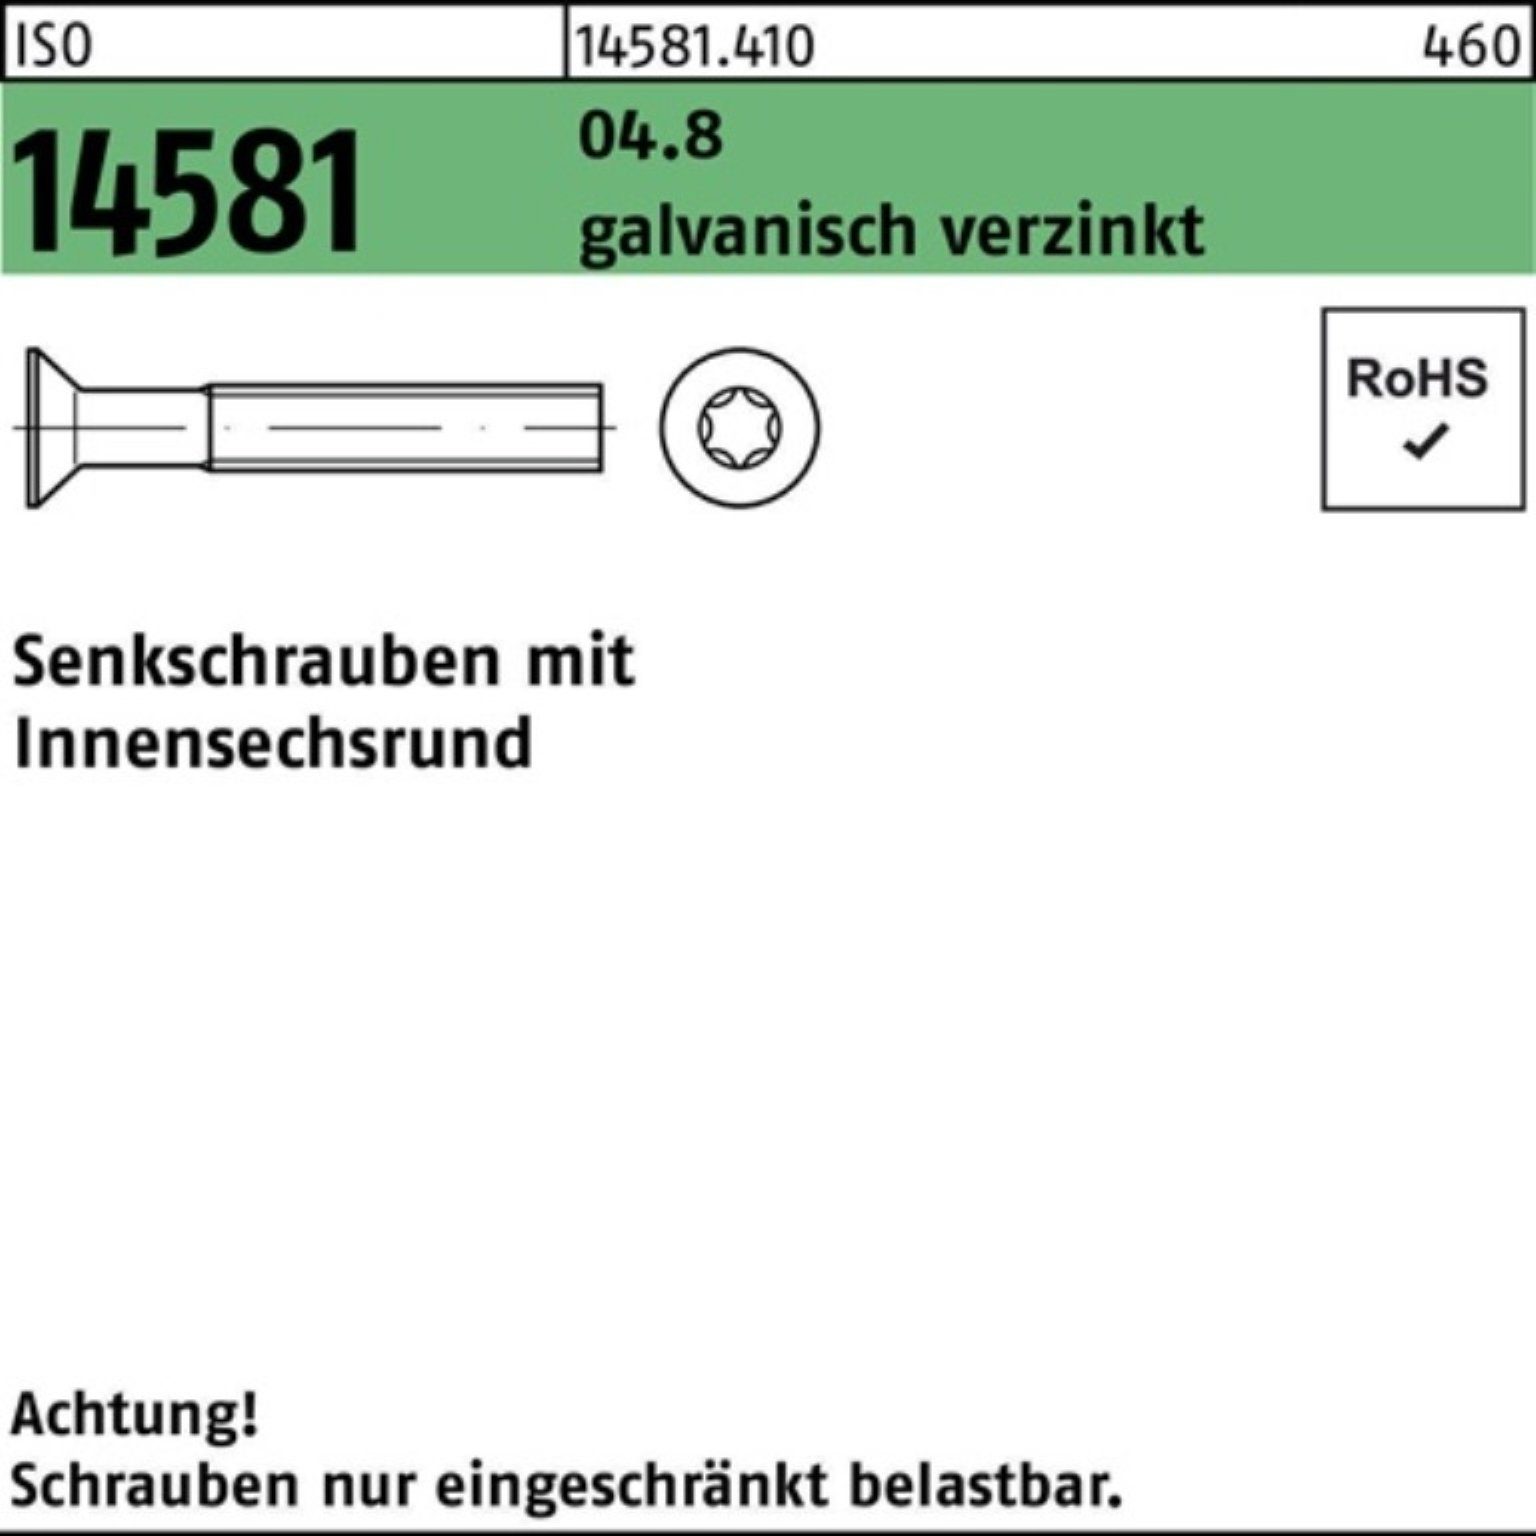 ISO Senkschraube 04.8 Pack Reyher ISR 1000S M4x35 1000er galv.verz. 14581 Senkschraube T20